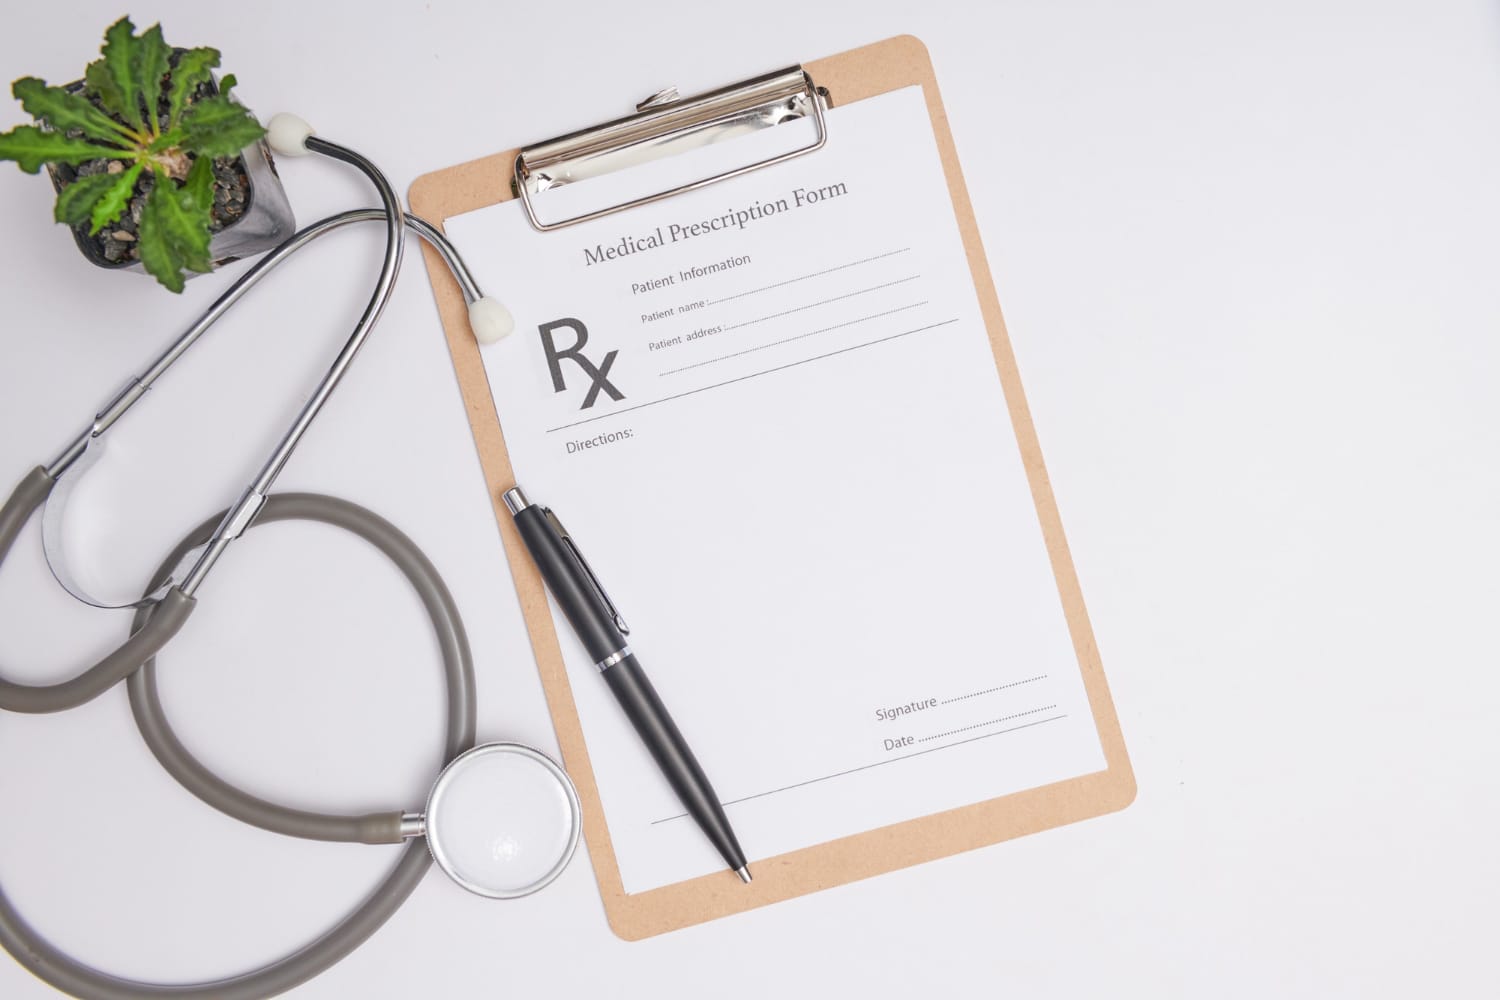 Do you need a doctor’s prescription for Delta 8, Delta 9 or CBD?